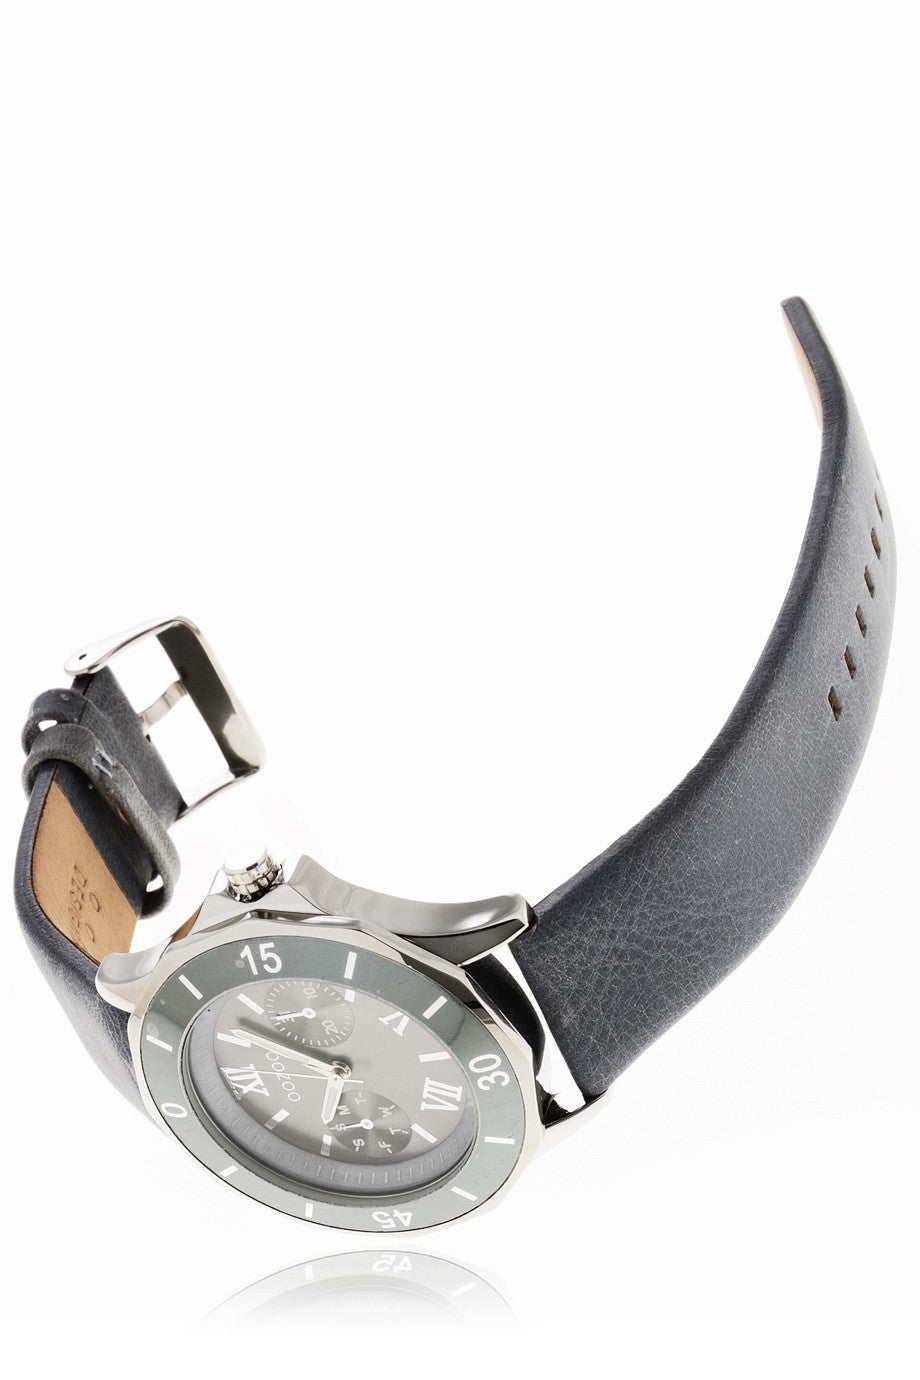 OOZOO C5317 Blue Gray Watch